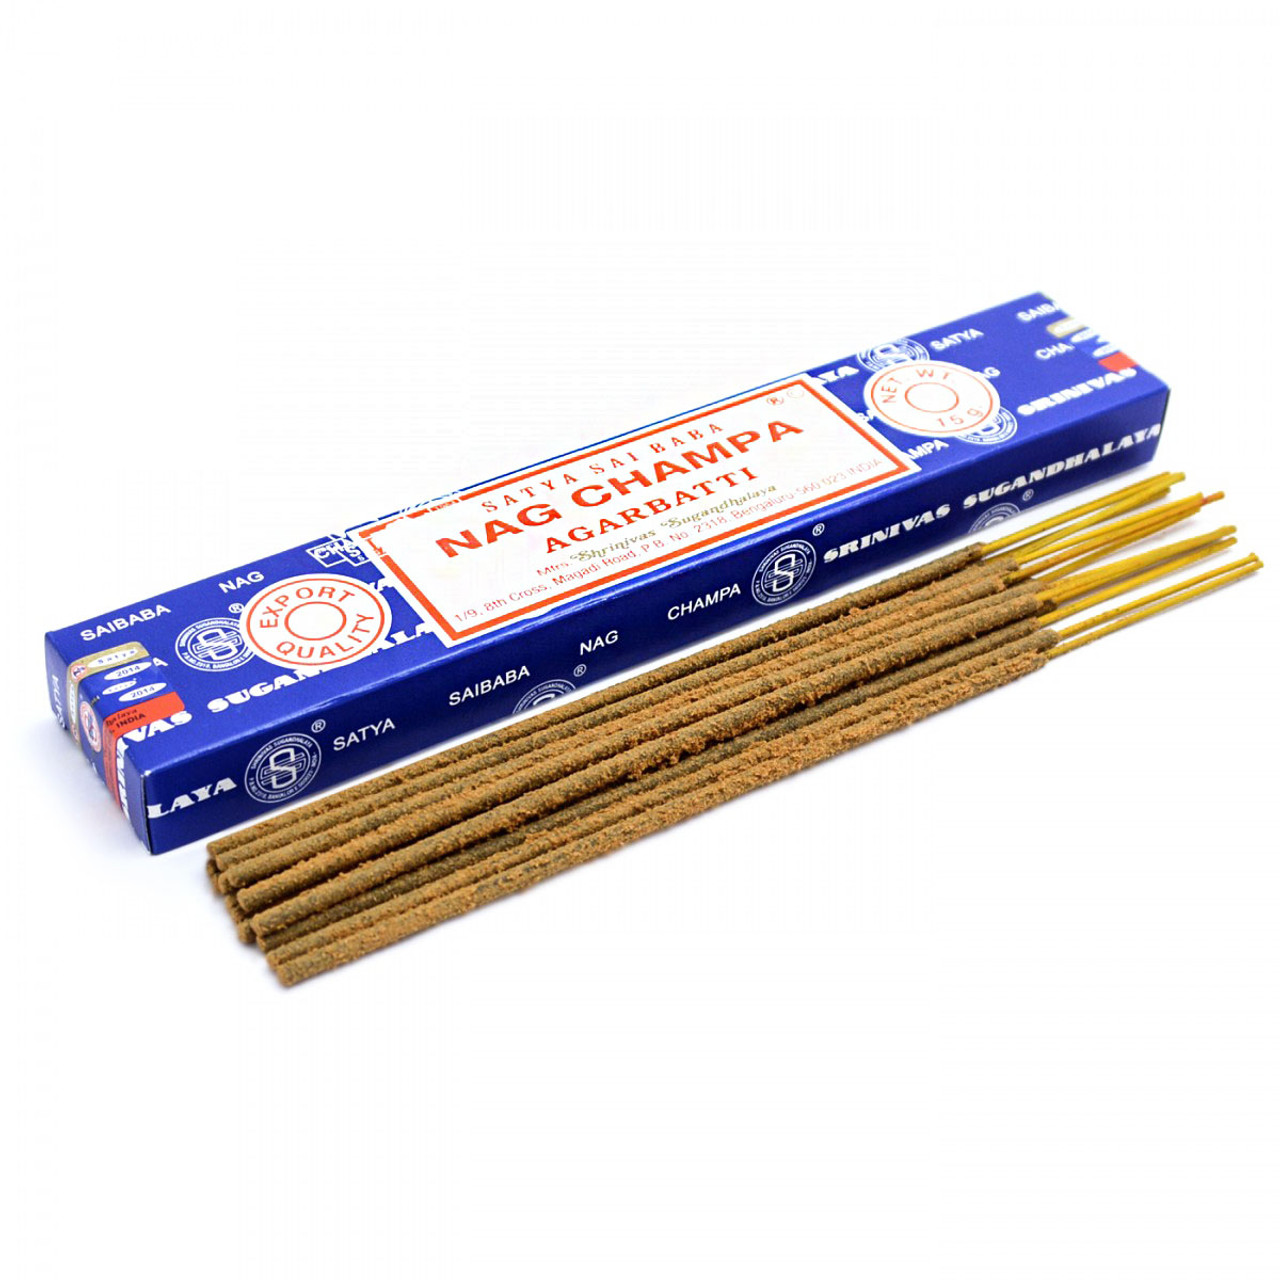 Nag Champa Incense Sticks - Fair Trade